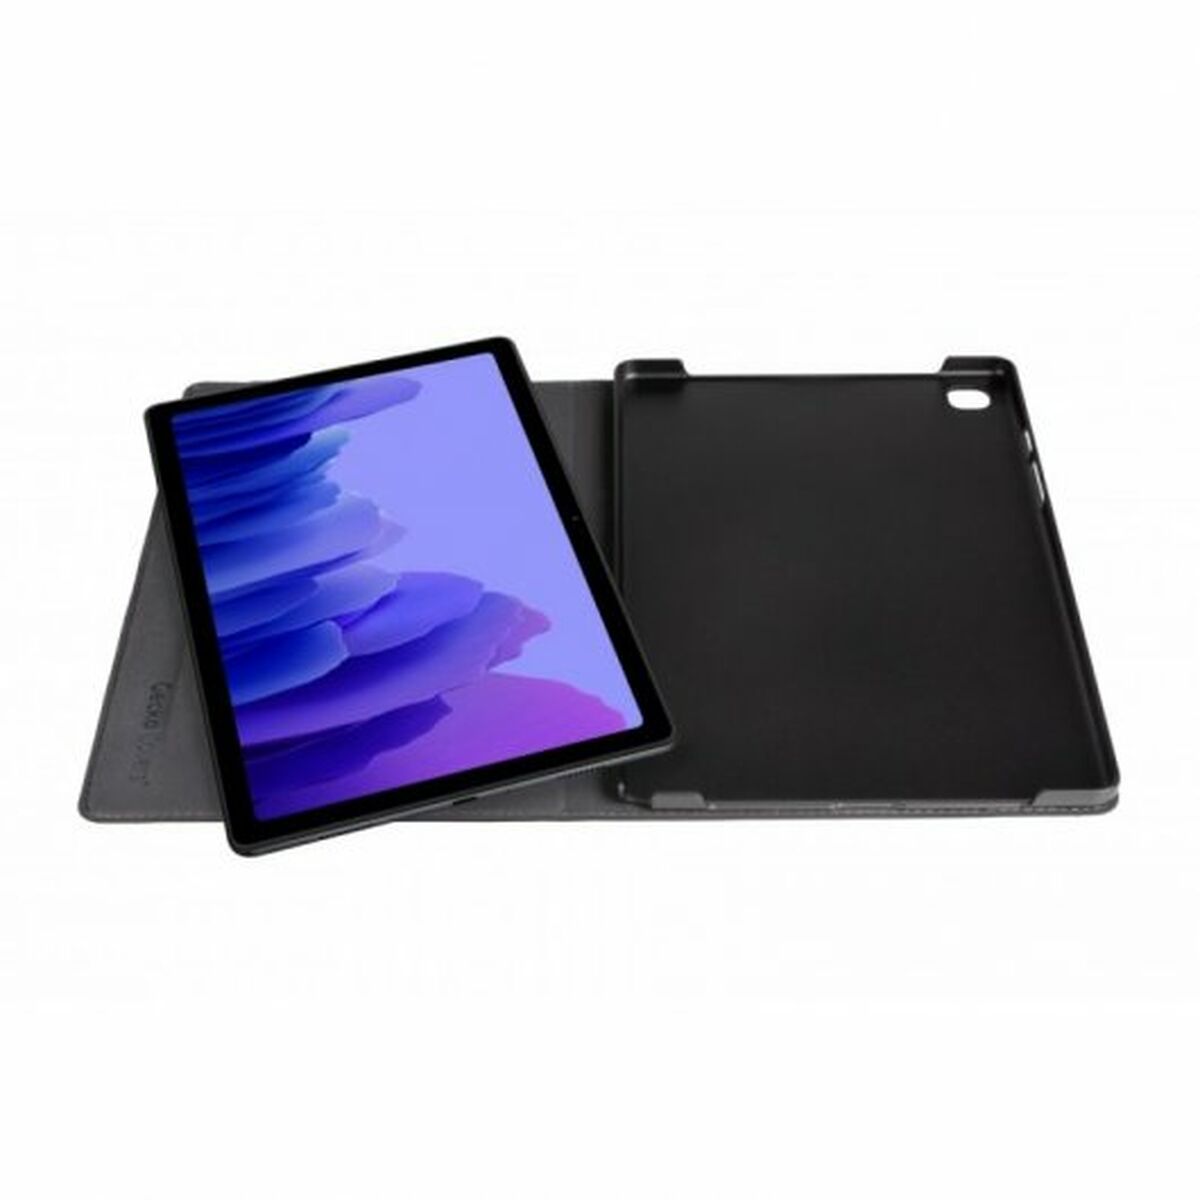 Tampa do tablet Samsung Galaxy Tab A7 Gecko cobre o Galaxy Tab A7 10.4 2020 10,4 "Gray